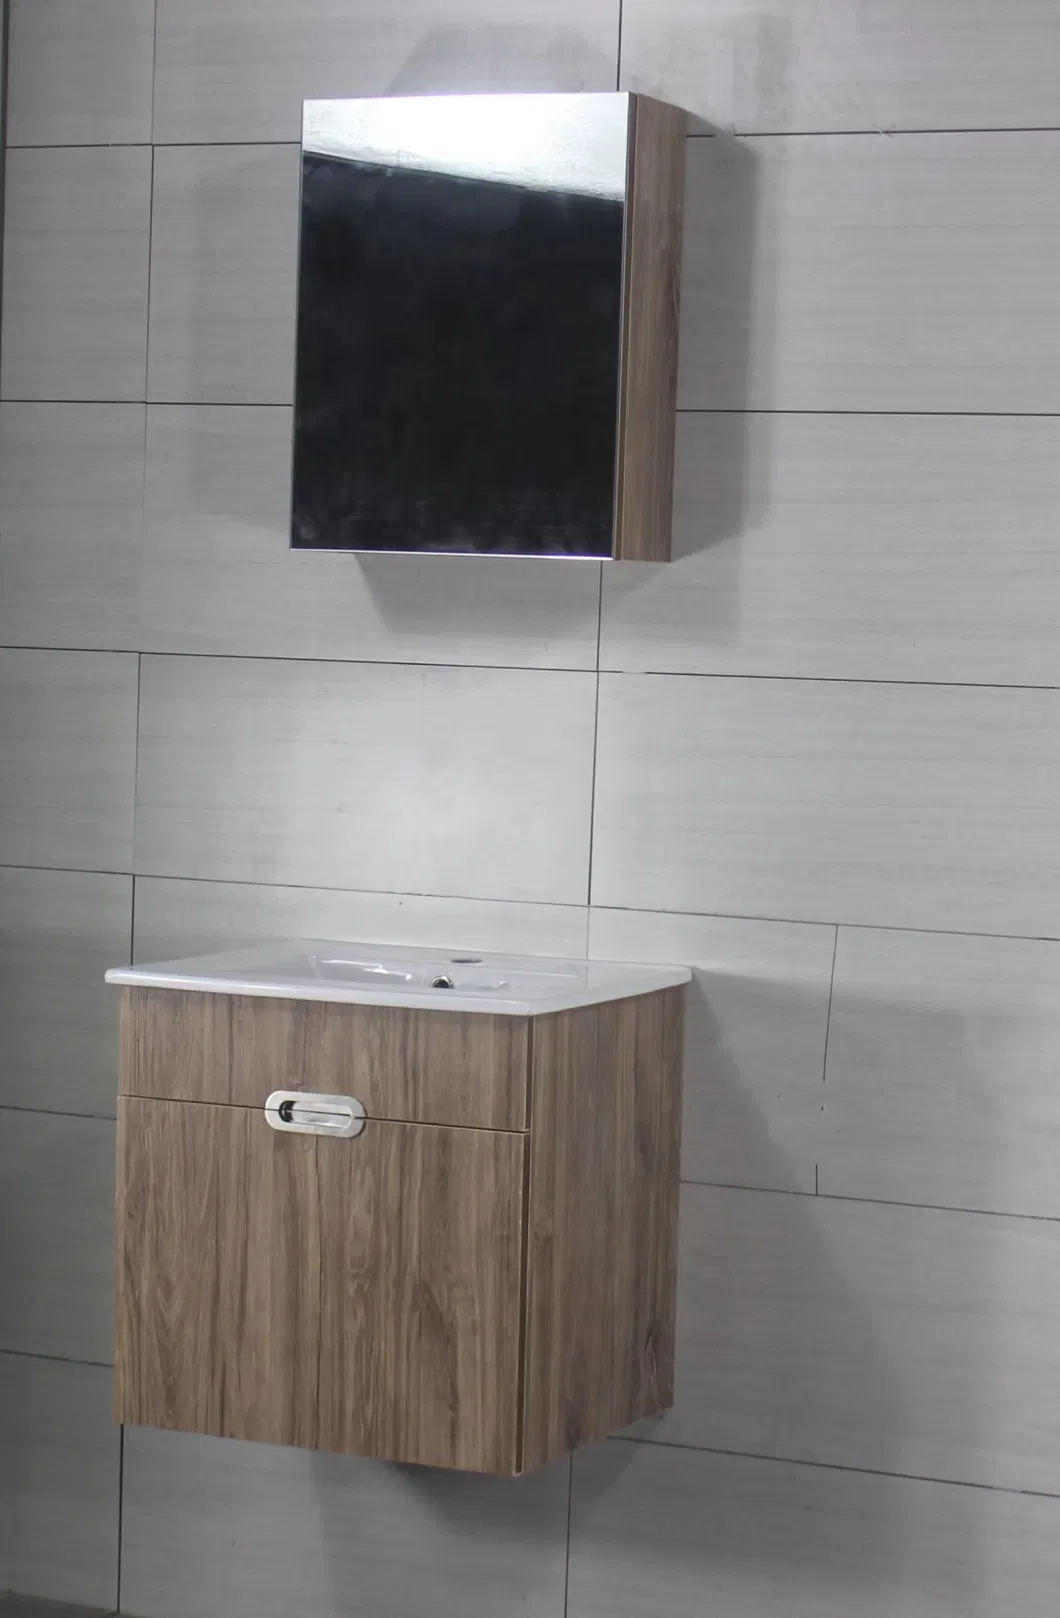 Vanities Home Modern Design PVC Melamine Bathroom Furniture Wall Hung Bathroom Vanity with Mirror Cabinet 500mm